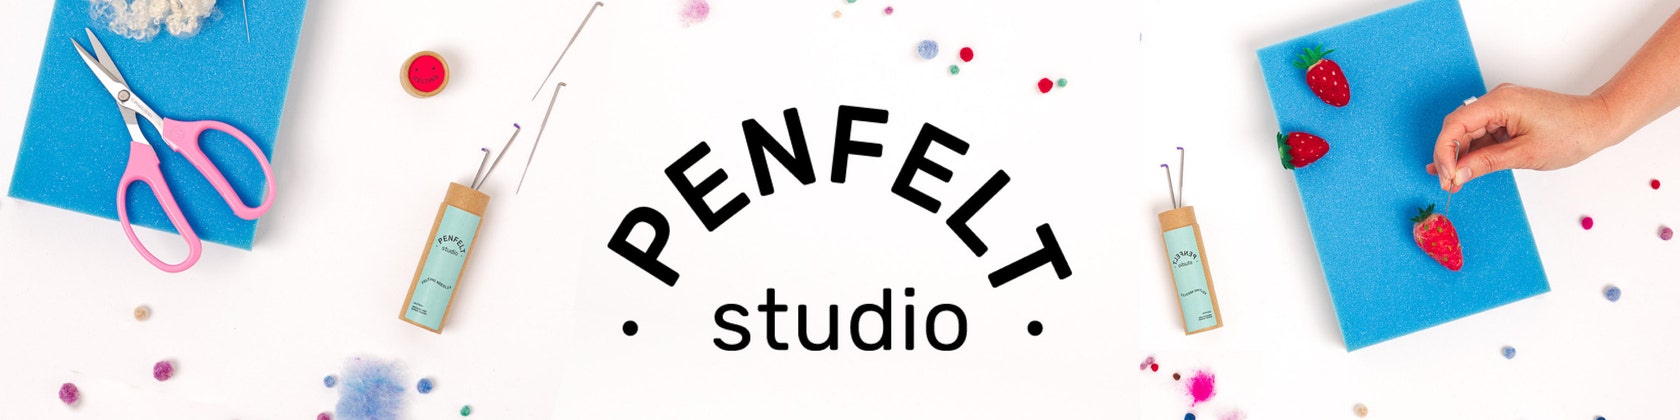 PenFelt Studio